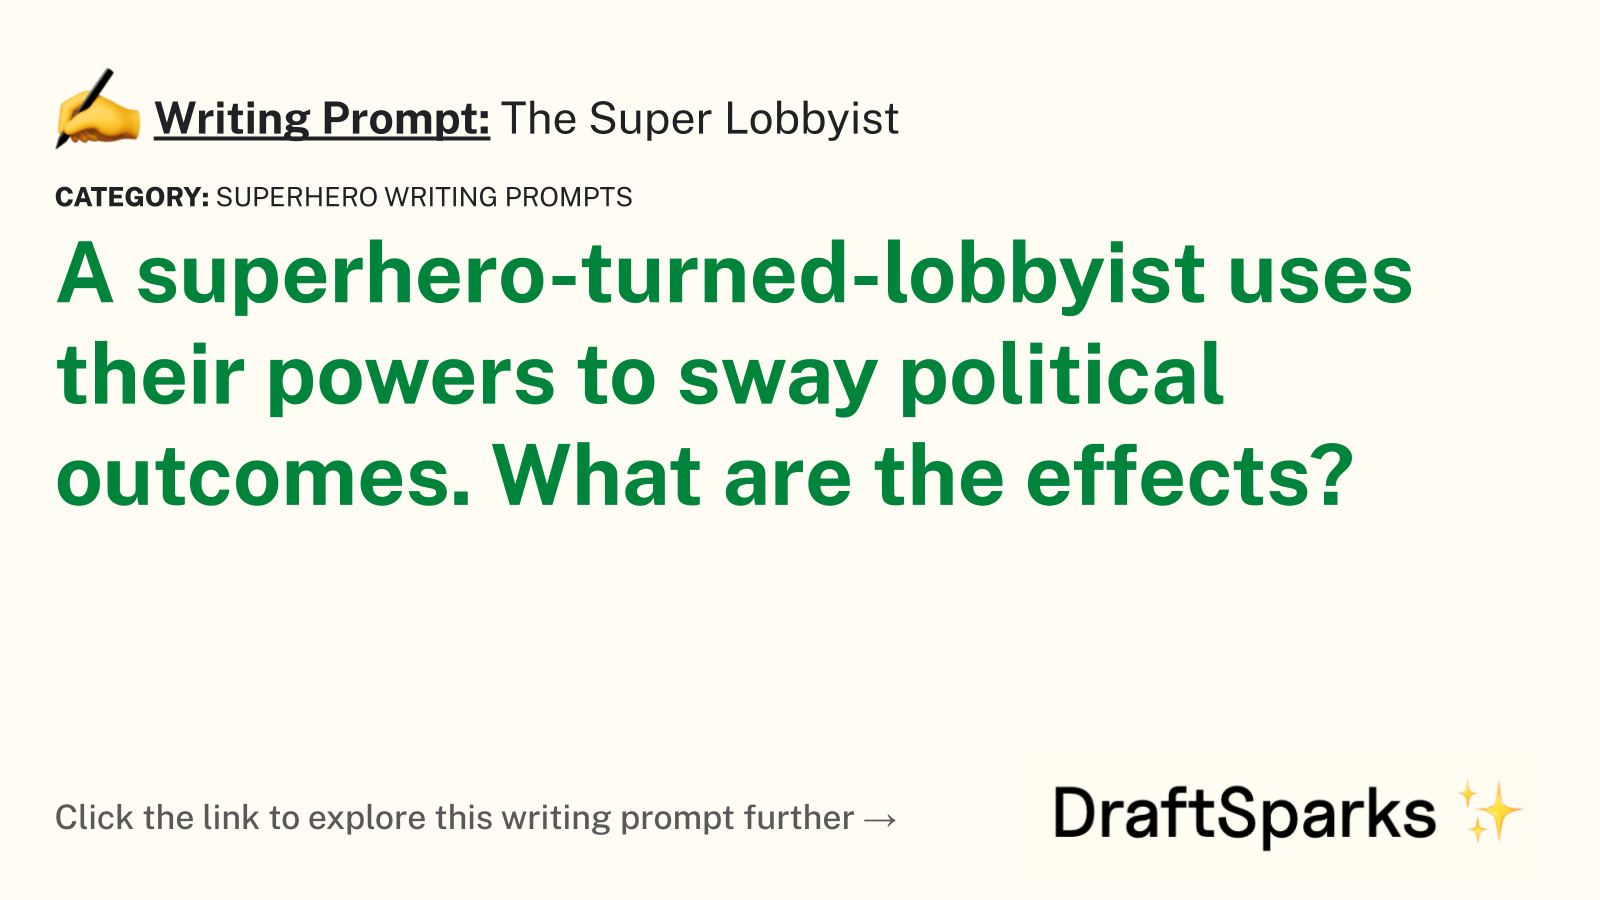 The Super Lobbyist